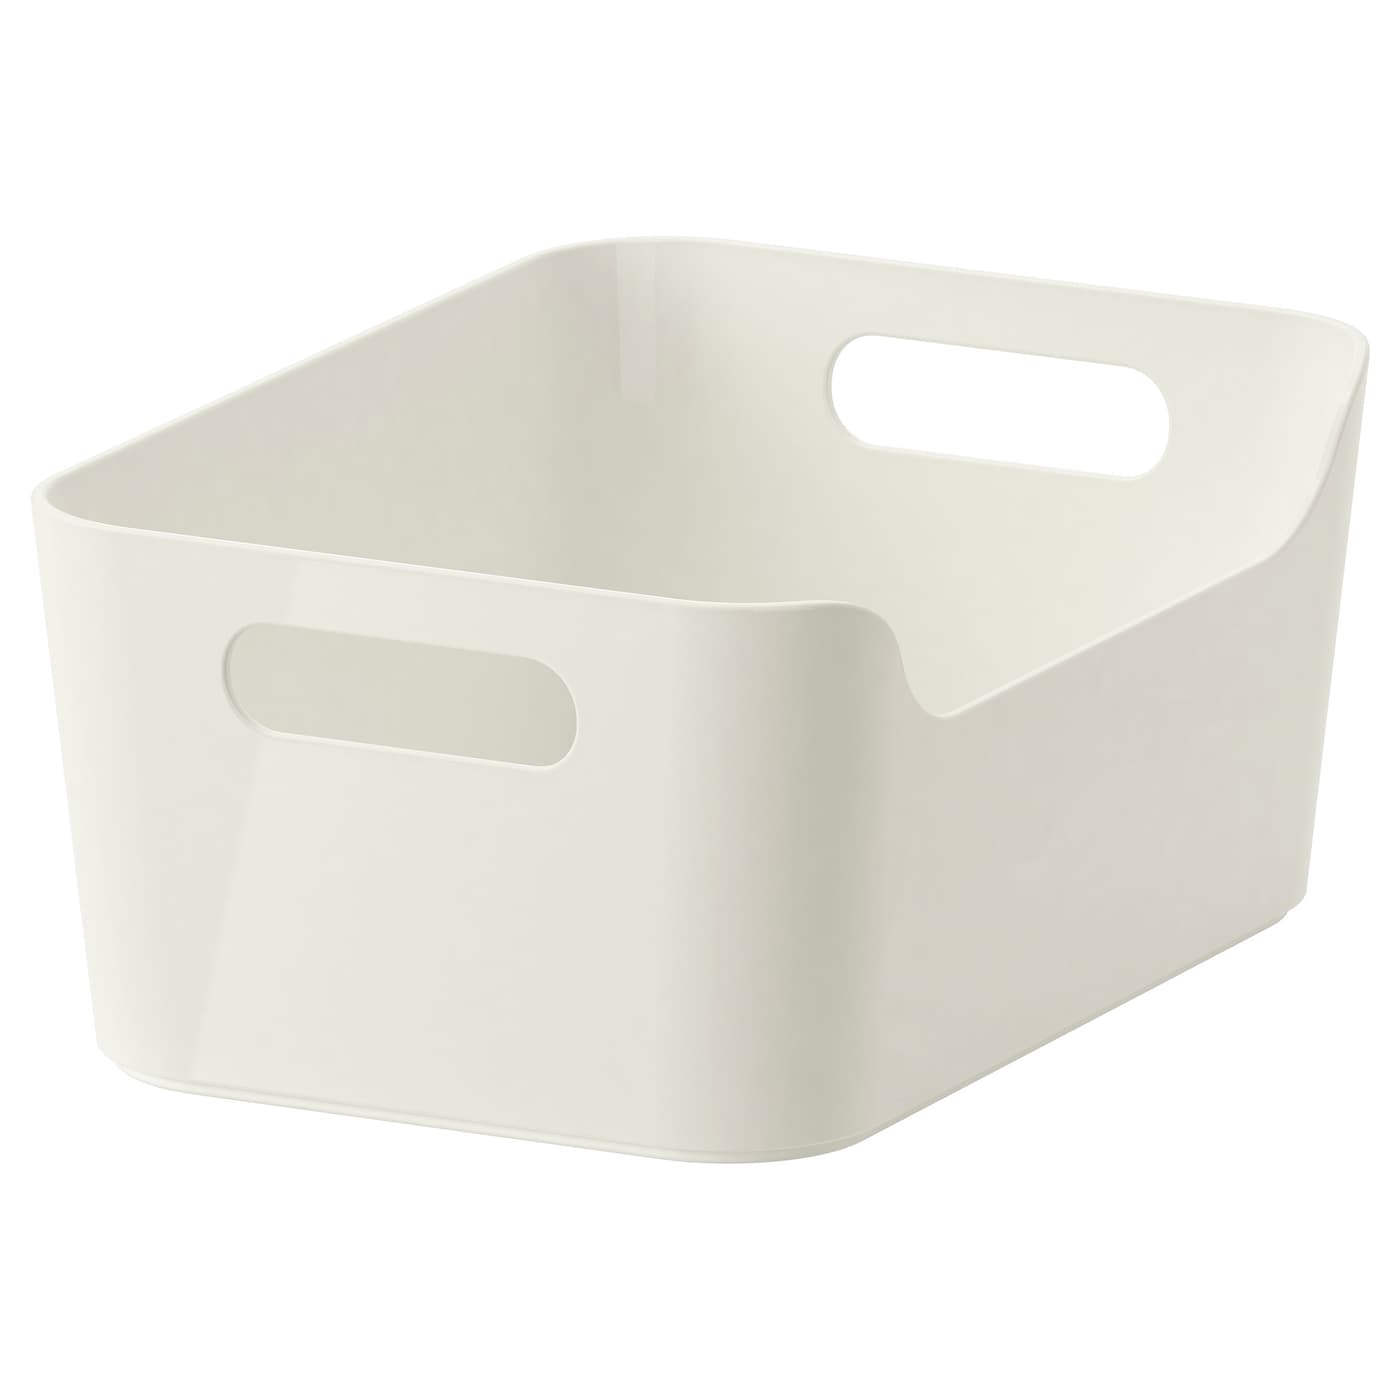 Коробка - VARIERA  IKEA/ ВАРЬЕРА ИКЕА, 24x17 см, белый